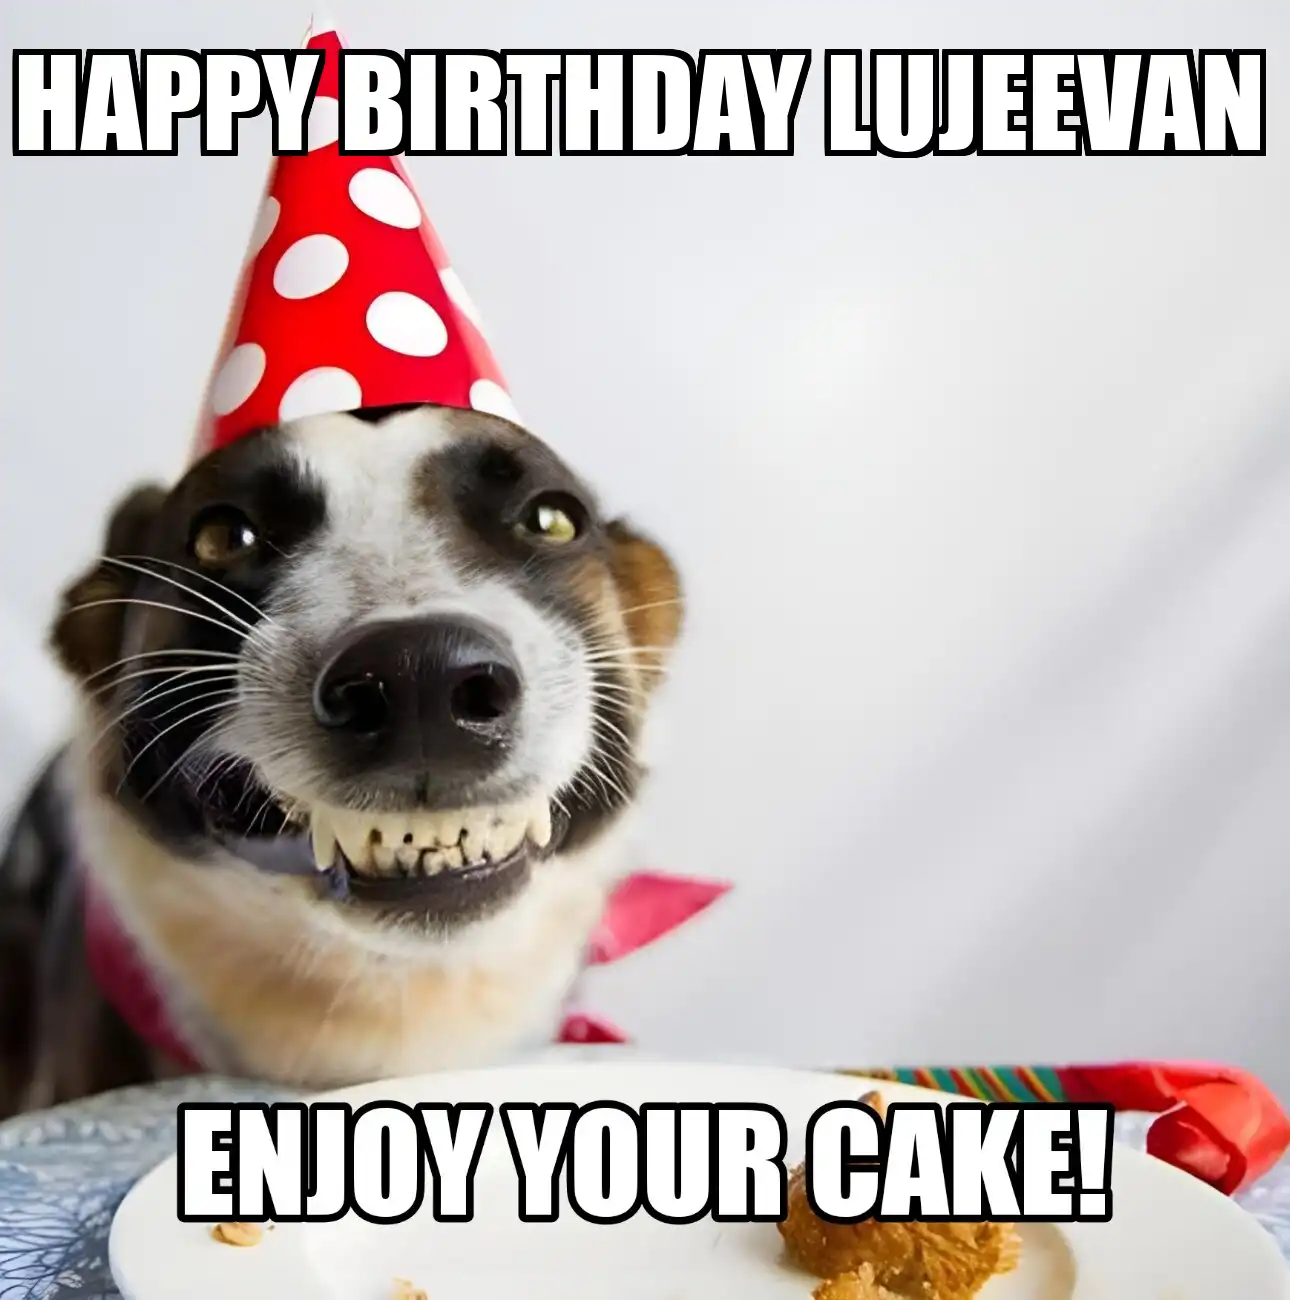 Happy Birthday Lujeevan Enjoy Your Cake Dog Meme